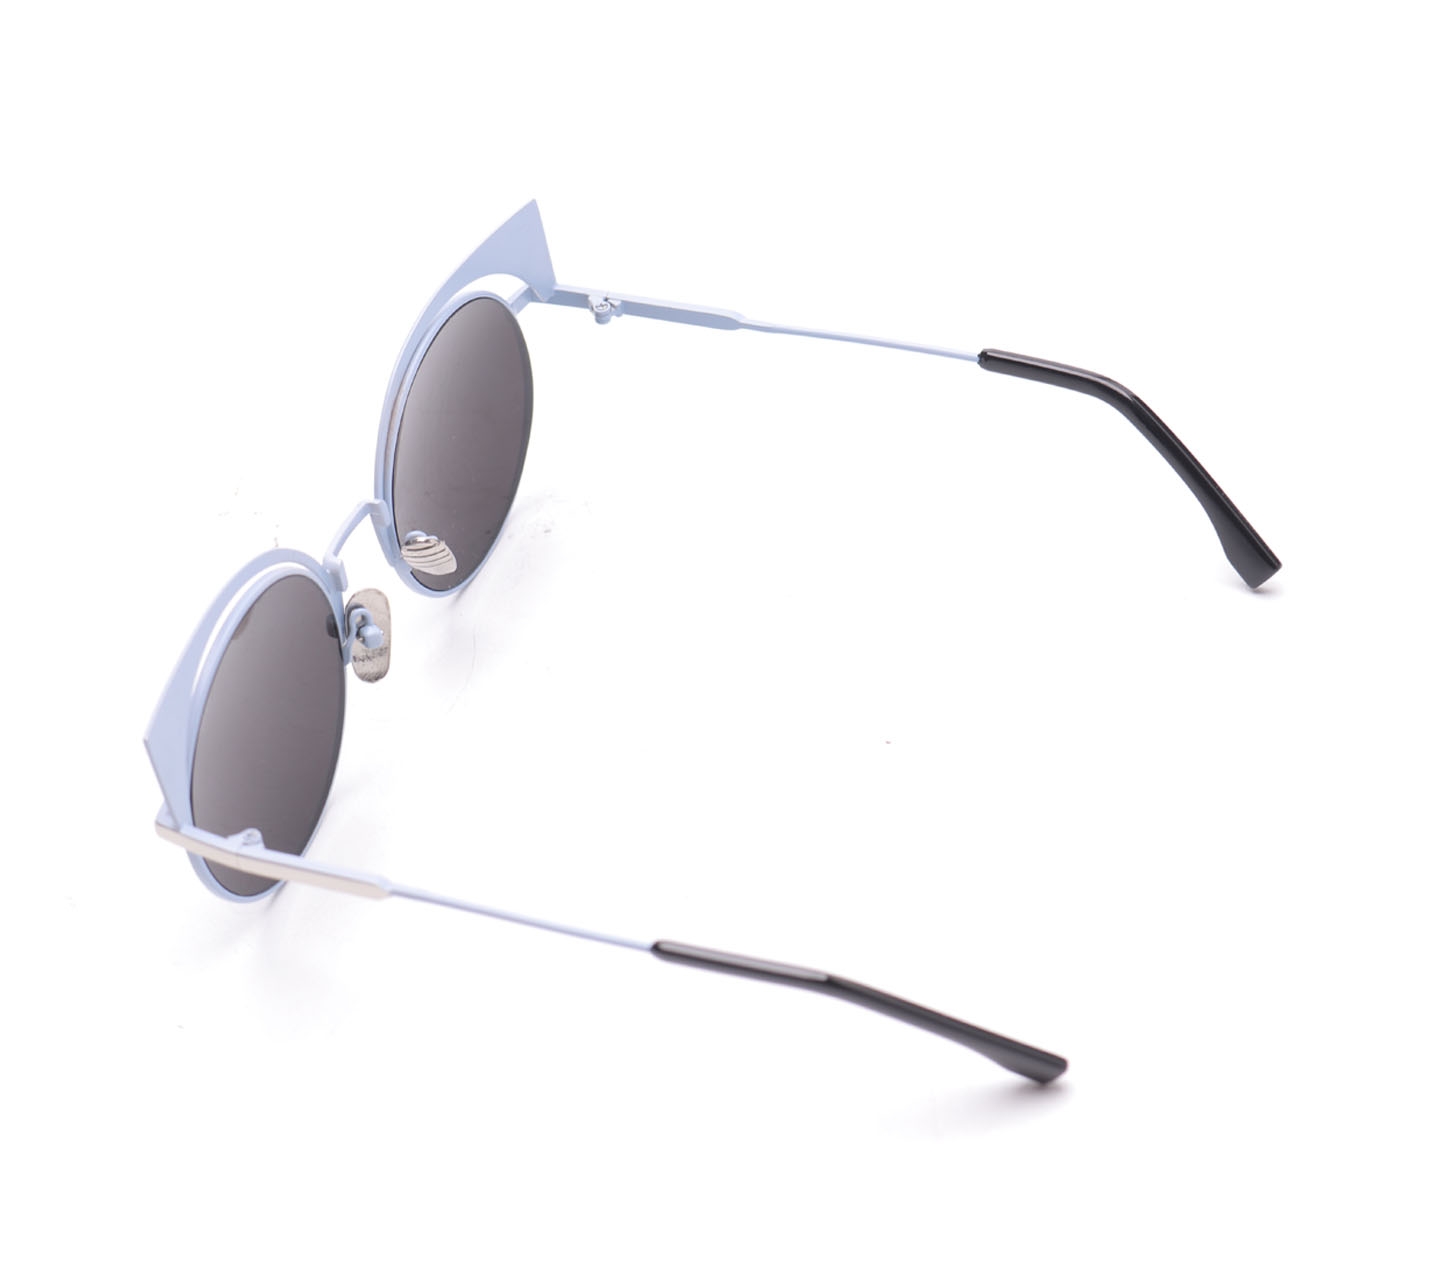 HSF Blue Sunglasses